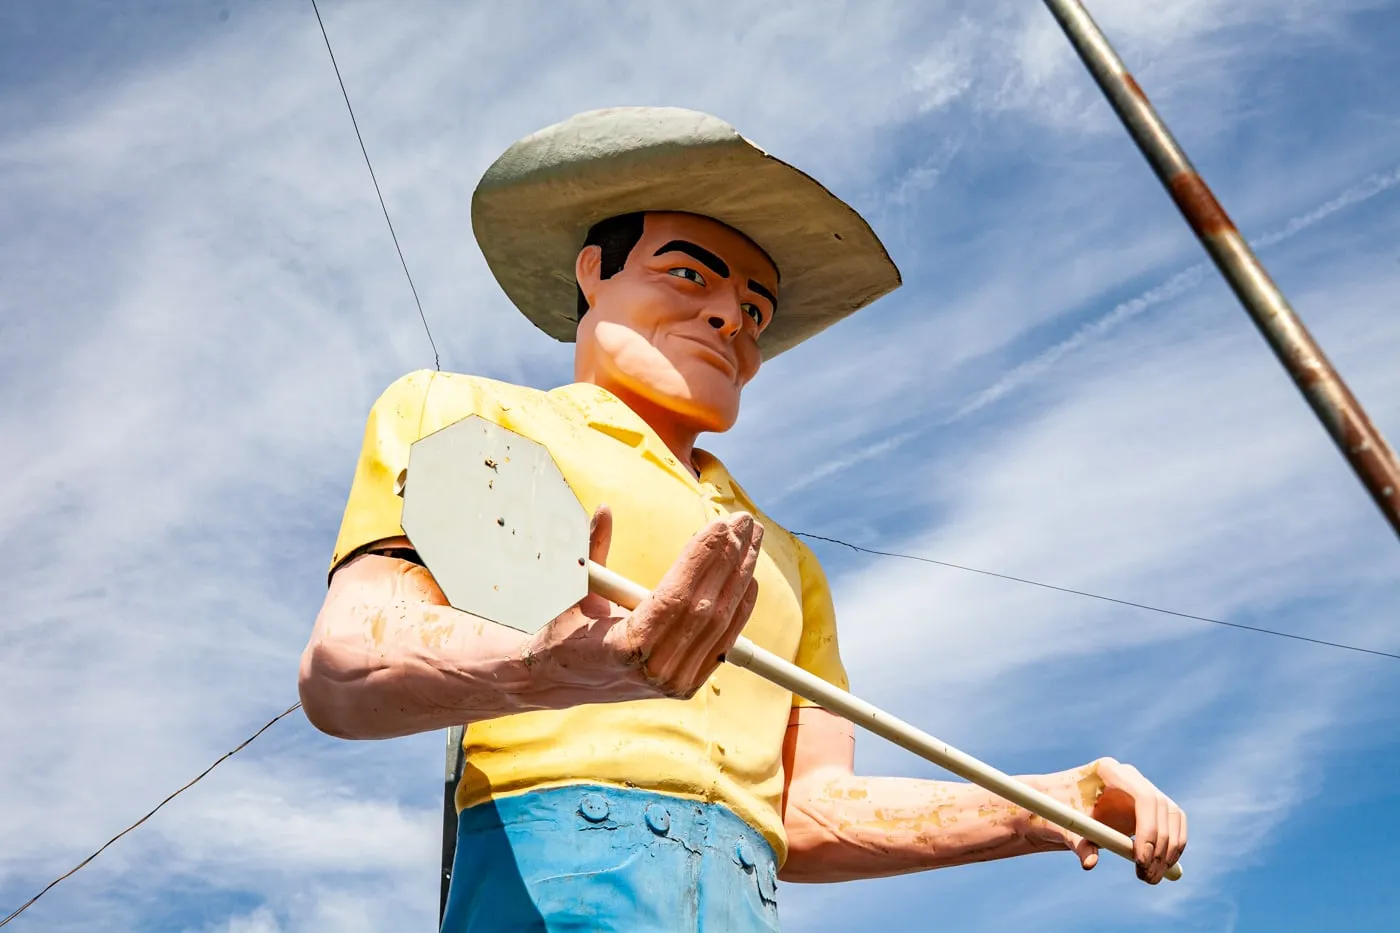 Cowboy Muffler Man in Wendell, Idaho | Idaho Roadside Attractions